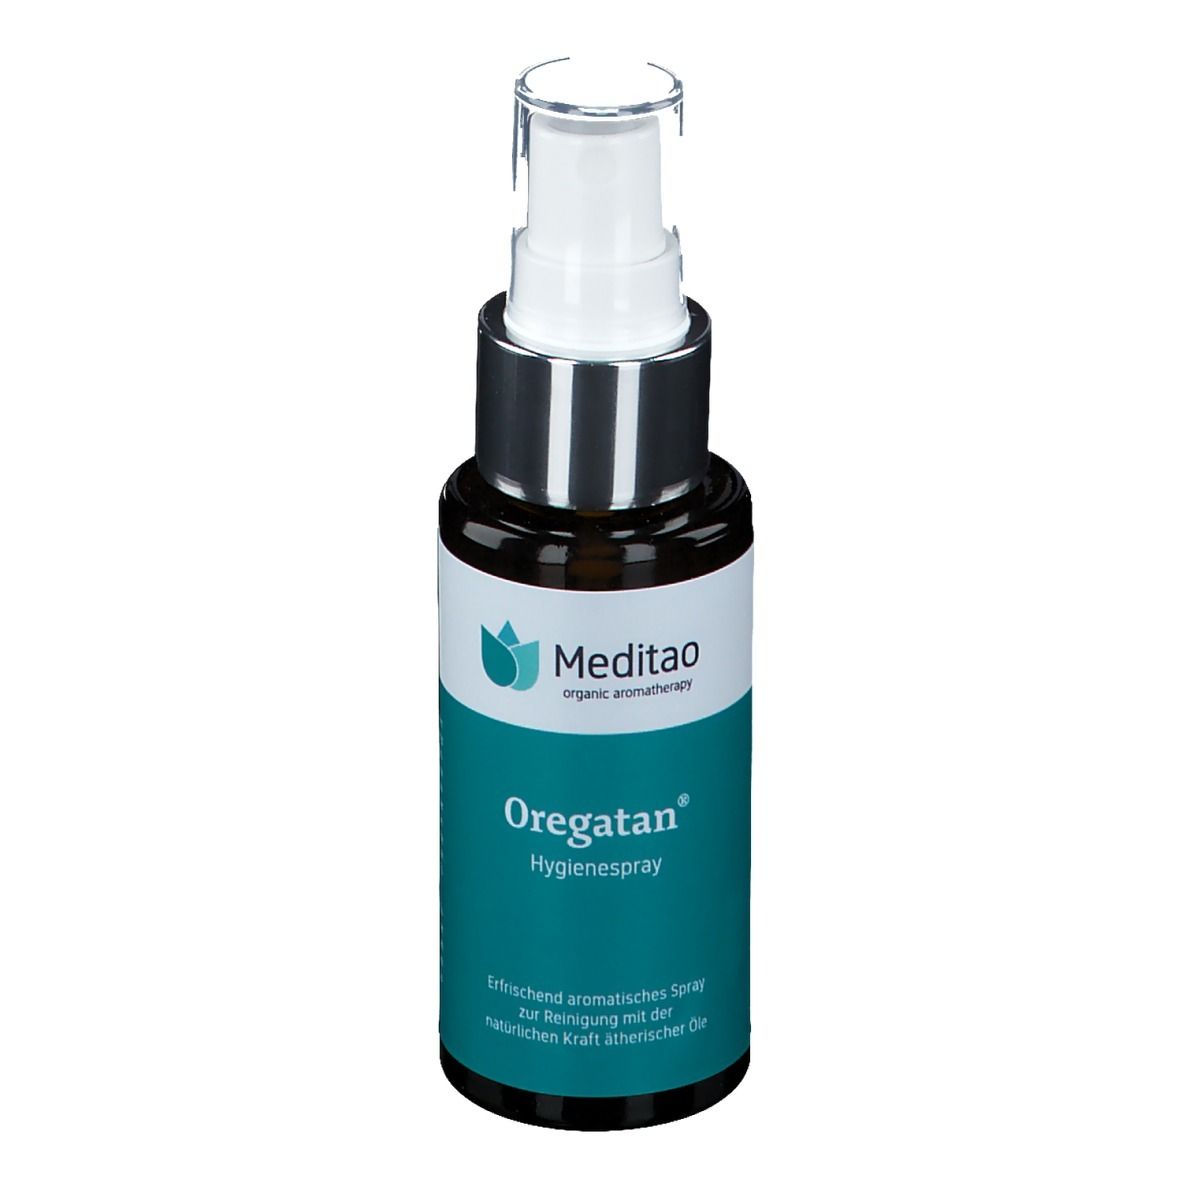 Taoasis® Meditao Oregatan Hygienespray